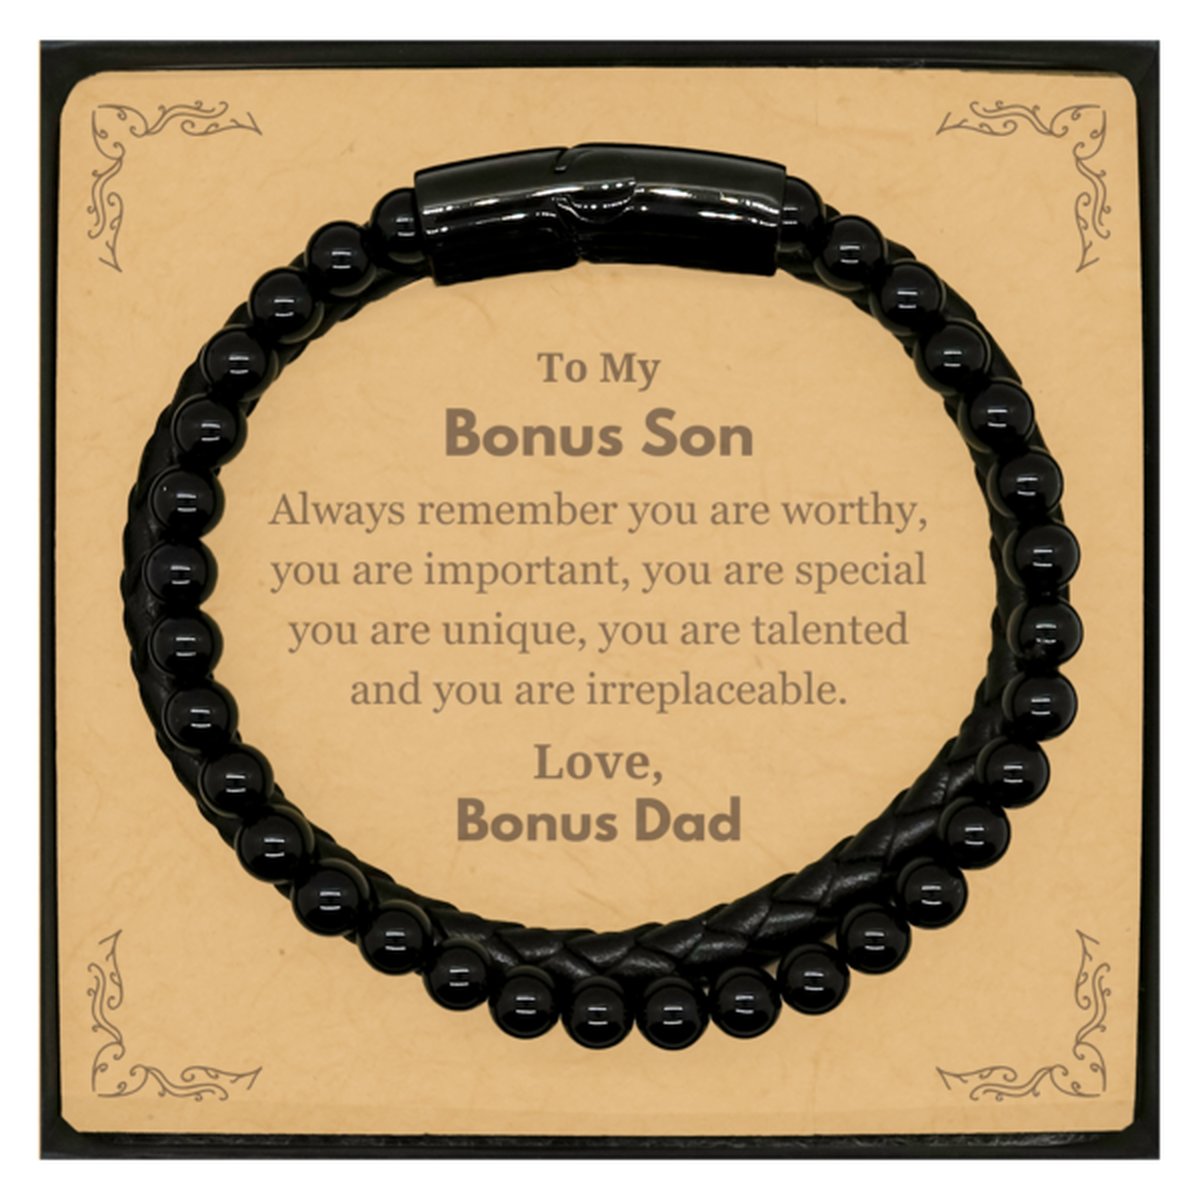 Bonus Son Birthday Gifts from Bonus Dad, Inspirational Stone Leather Bracelets for Bonus Son Christmas Graduation Gifts for Bonus Son Always remember you are worthy, you are important. Love, Bonus Dad